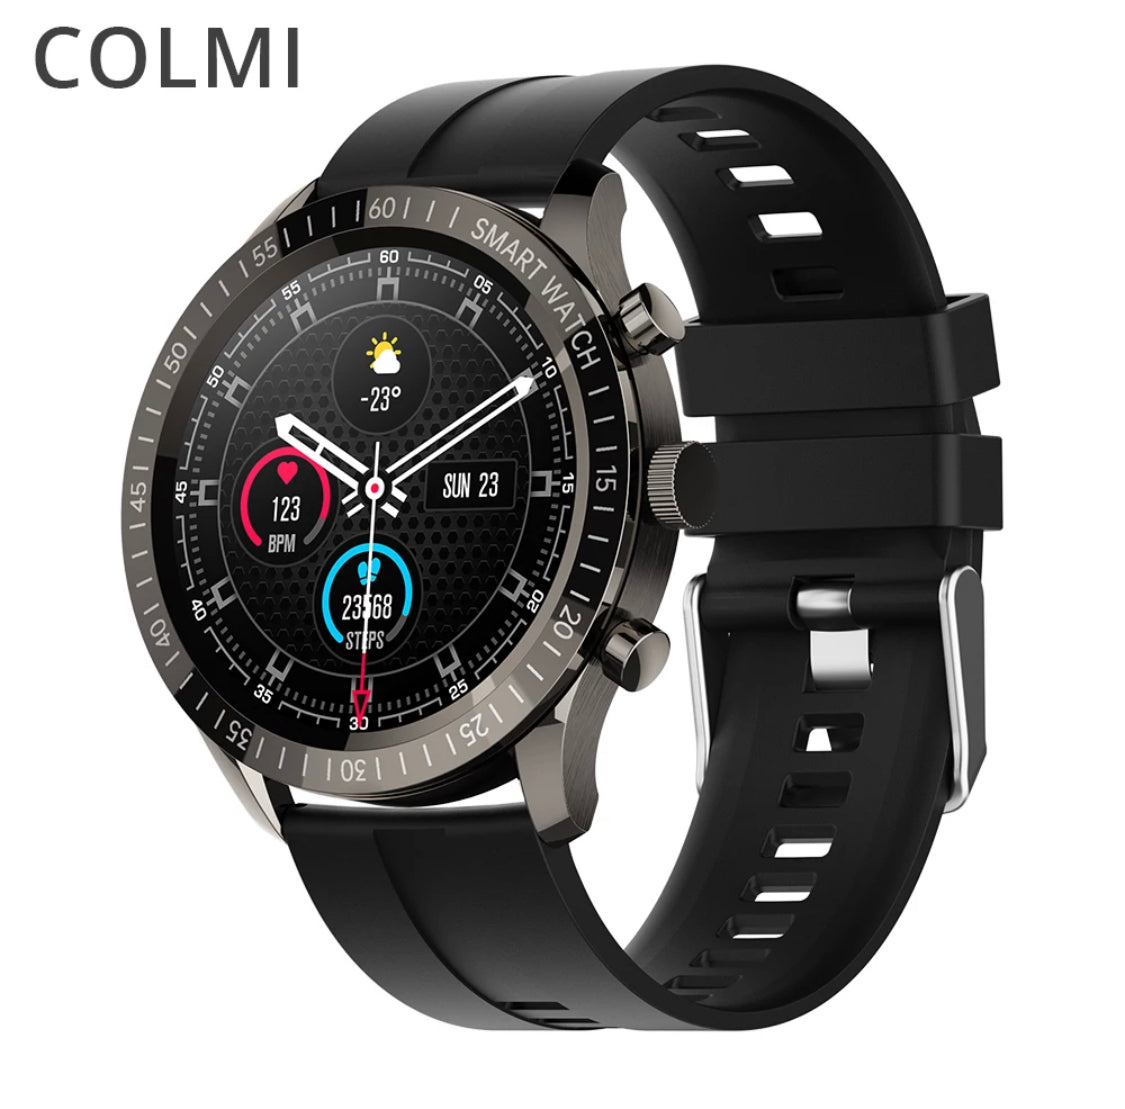 COLMI SKY 5Plus Smart Watch - Smart Watch South Africa 